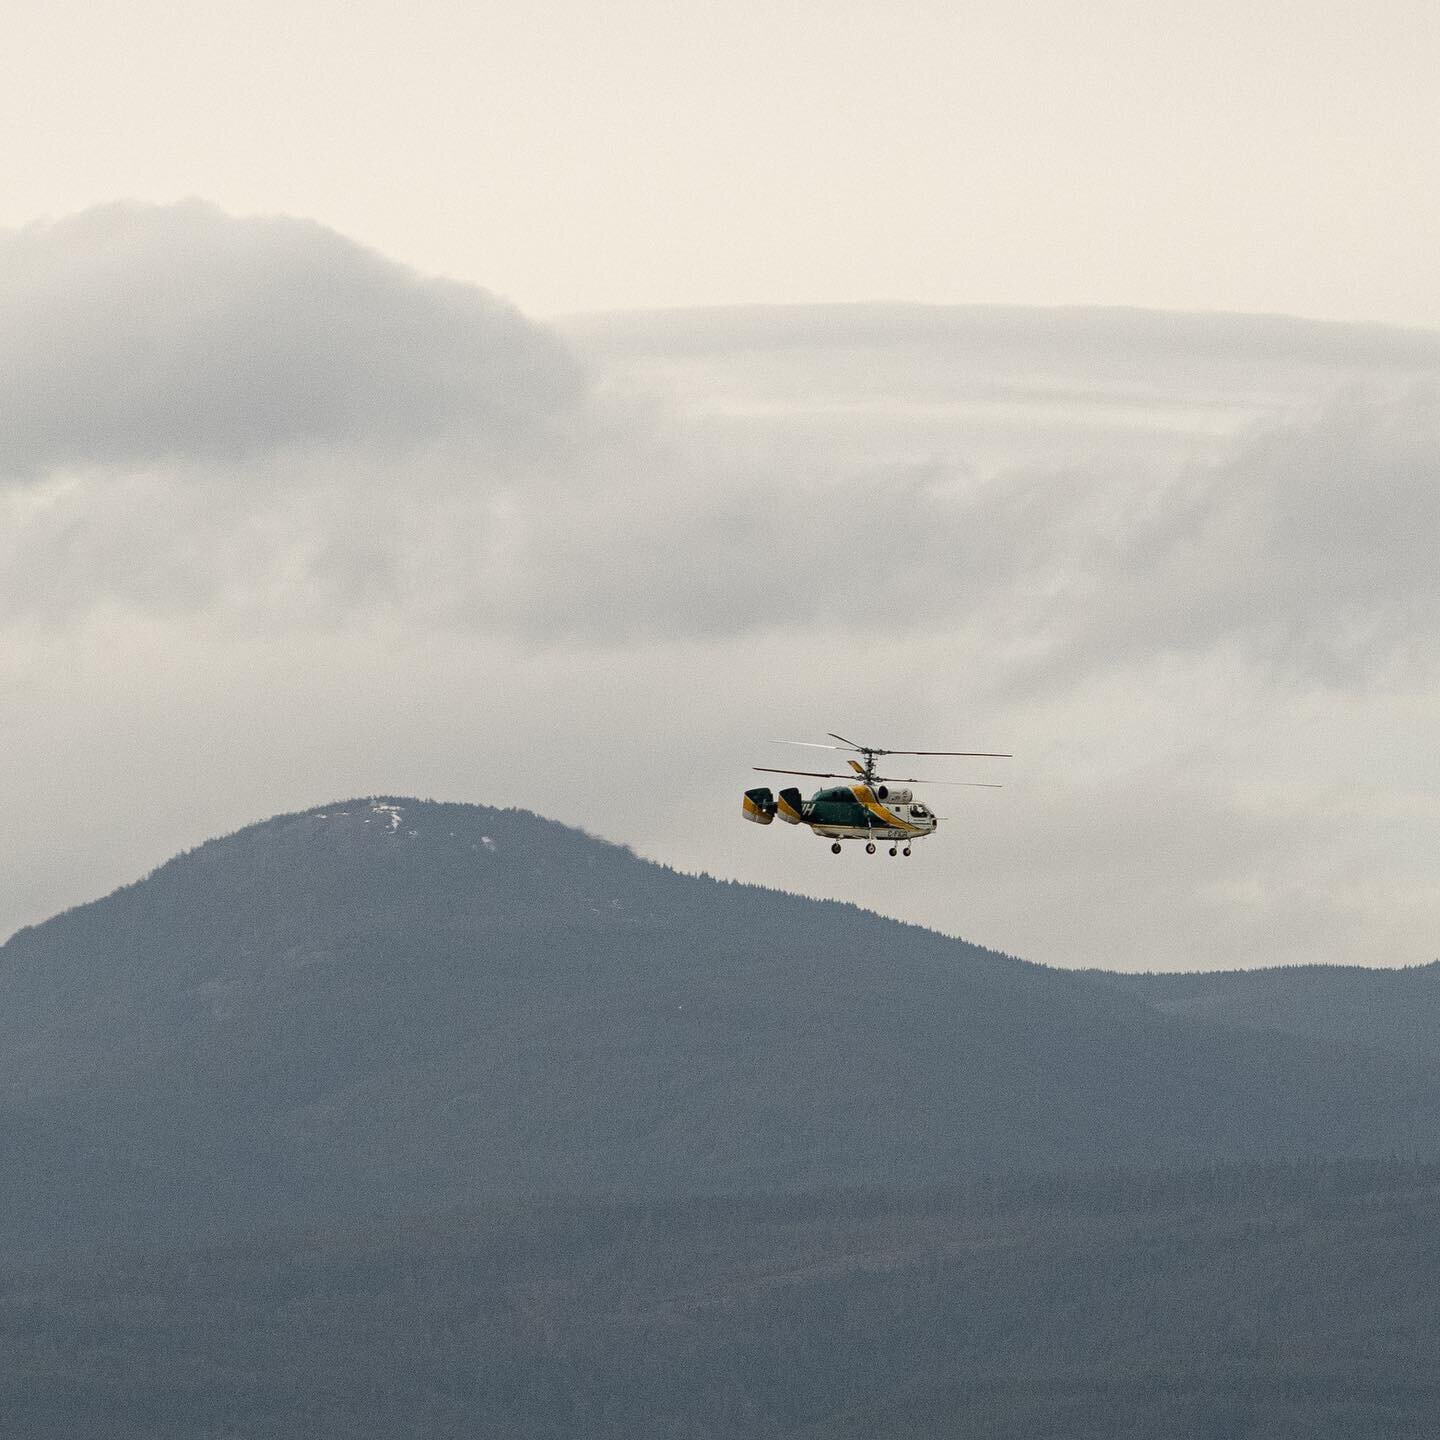 Russian made Kamov Ka-32 from VIH flying over the Sooke Hills #sooke #sookebc #helicopter #kamov #hellobc #vancouverisland #sookehills